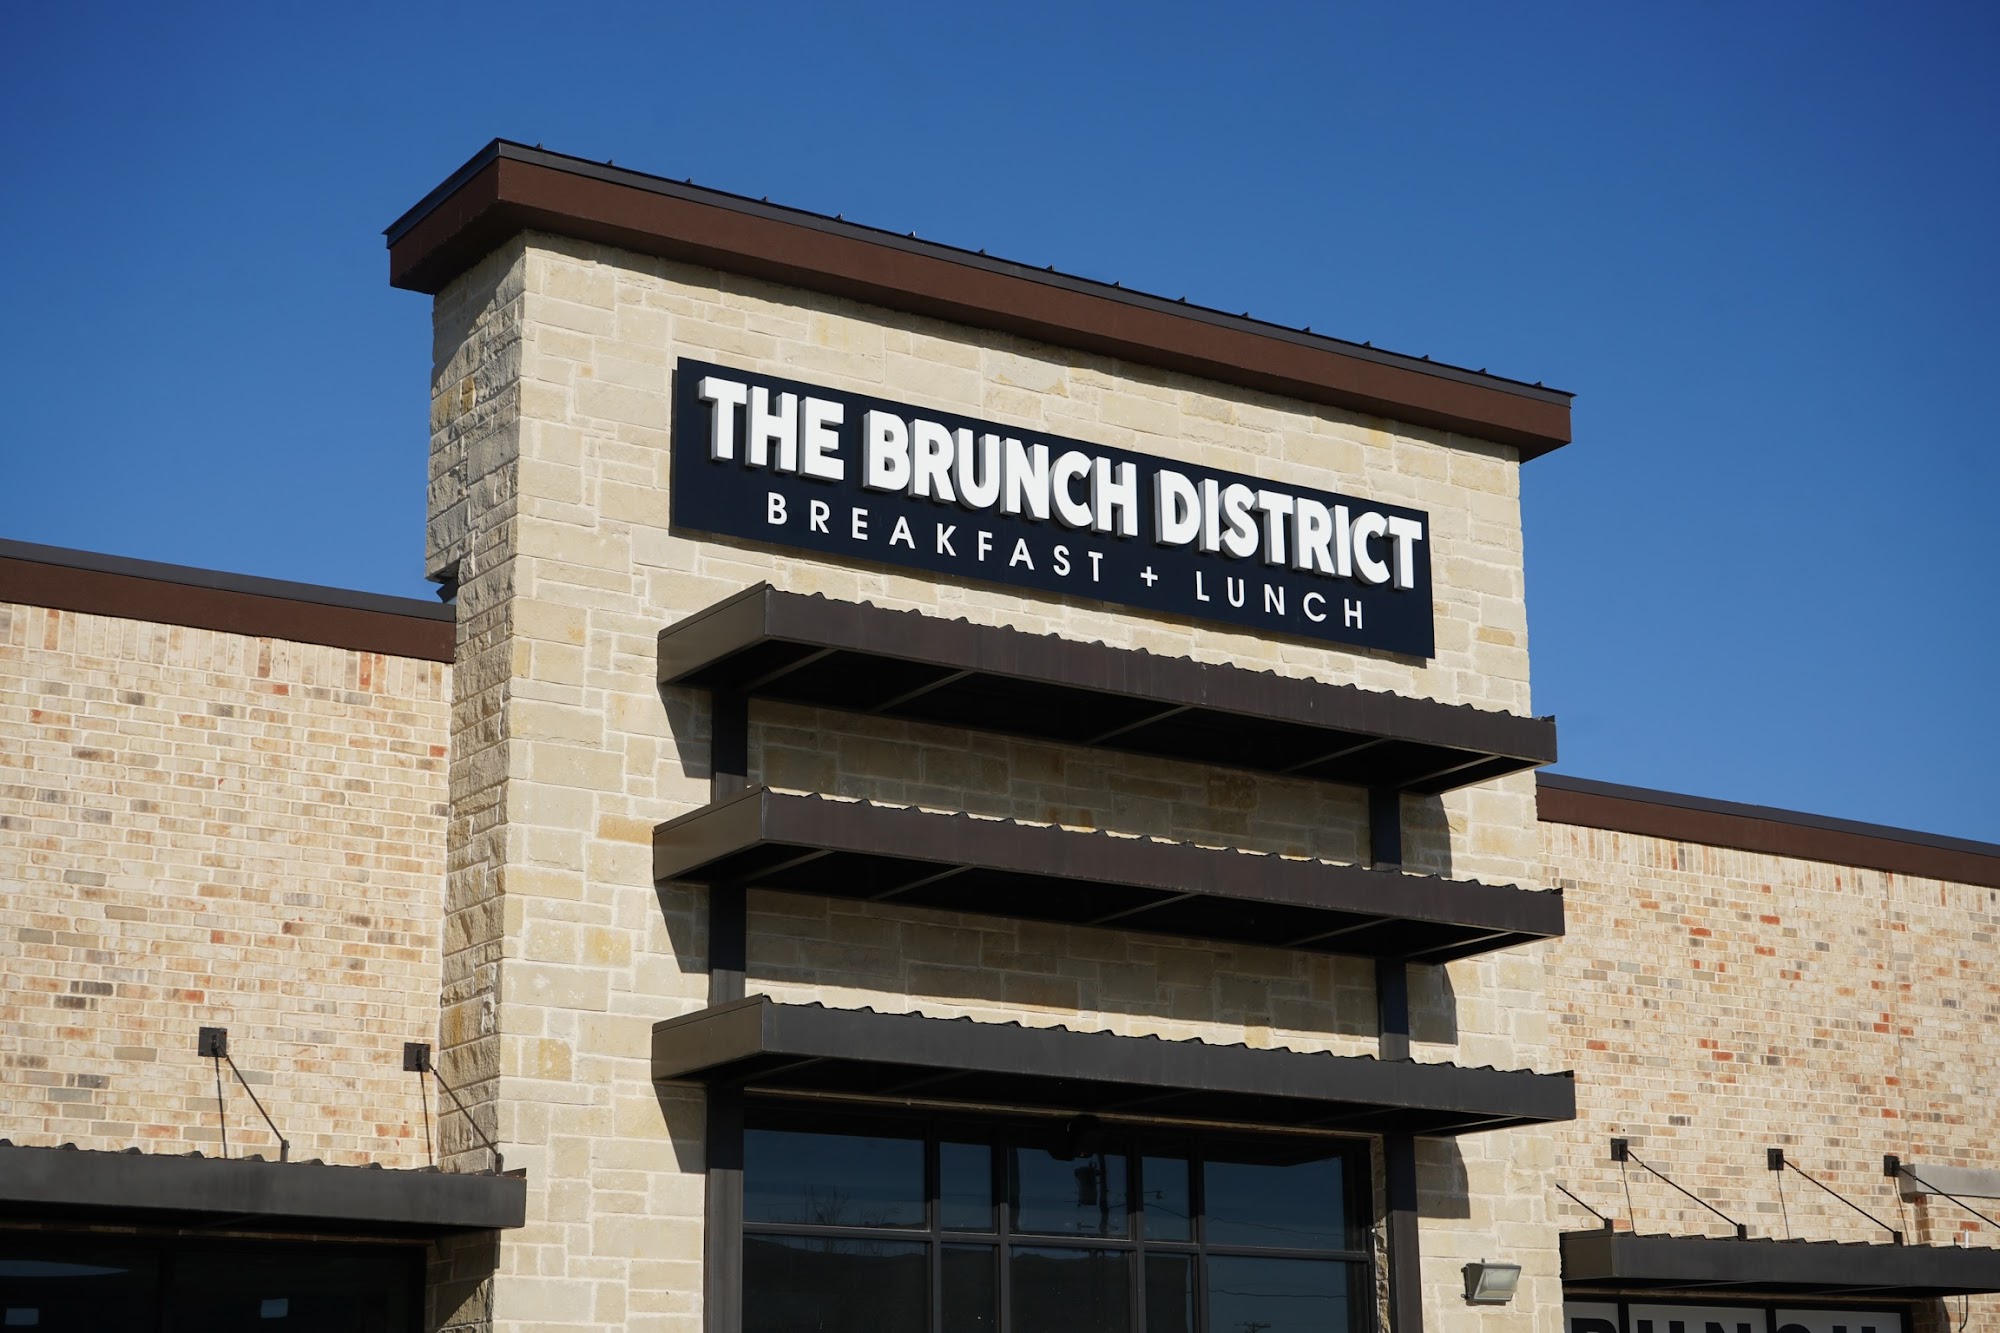 The Brunch District